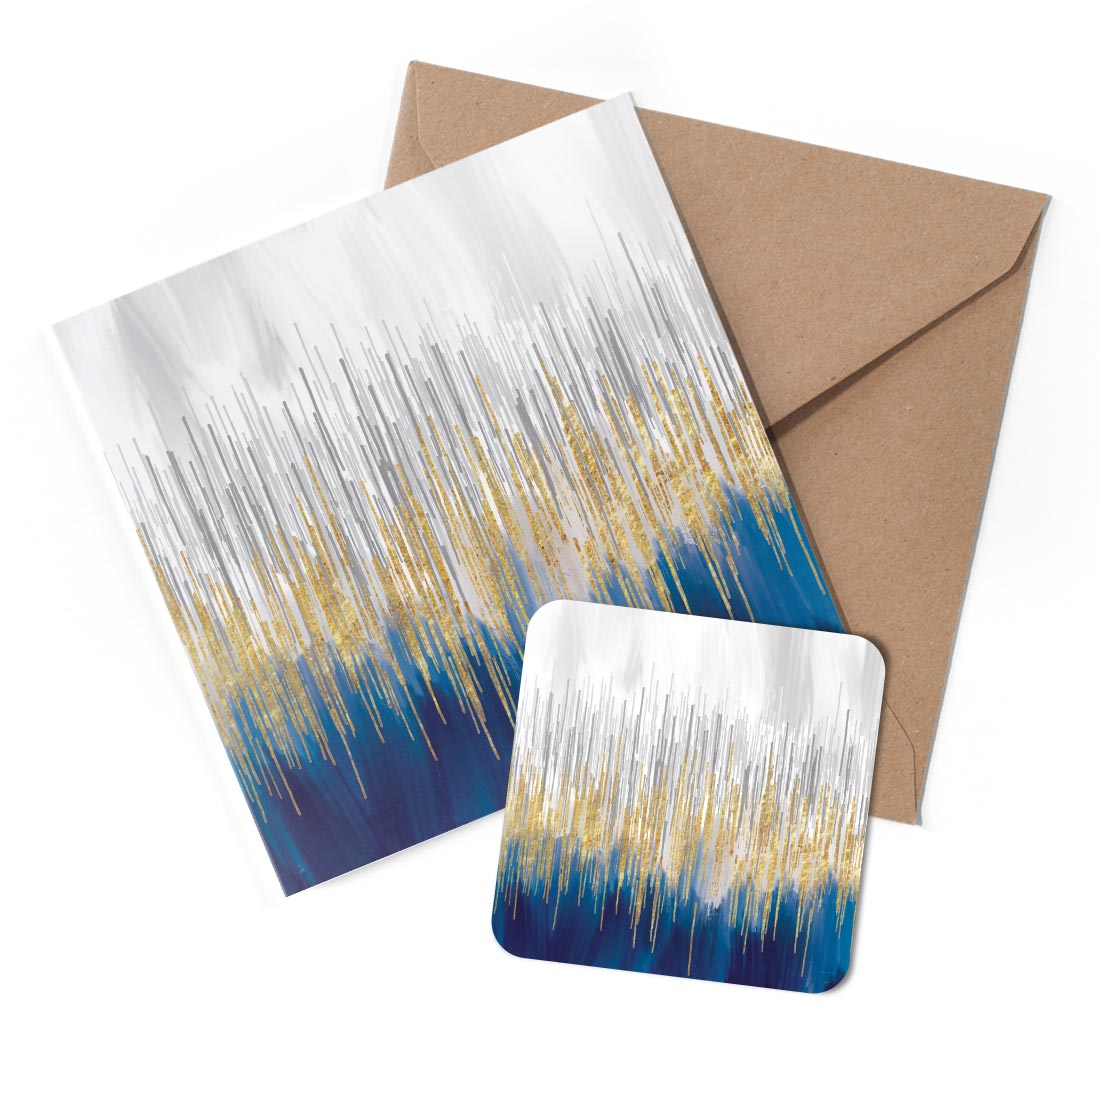 1 x Greeting Card & Coaster Set - Abstract Blue Gold Art #52571